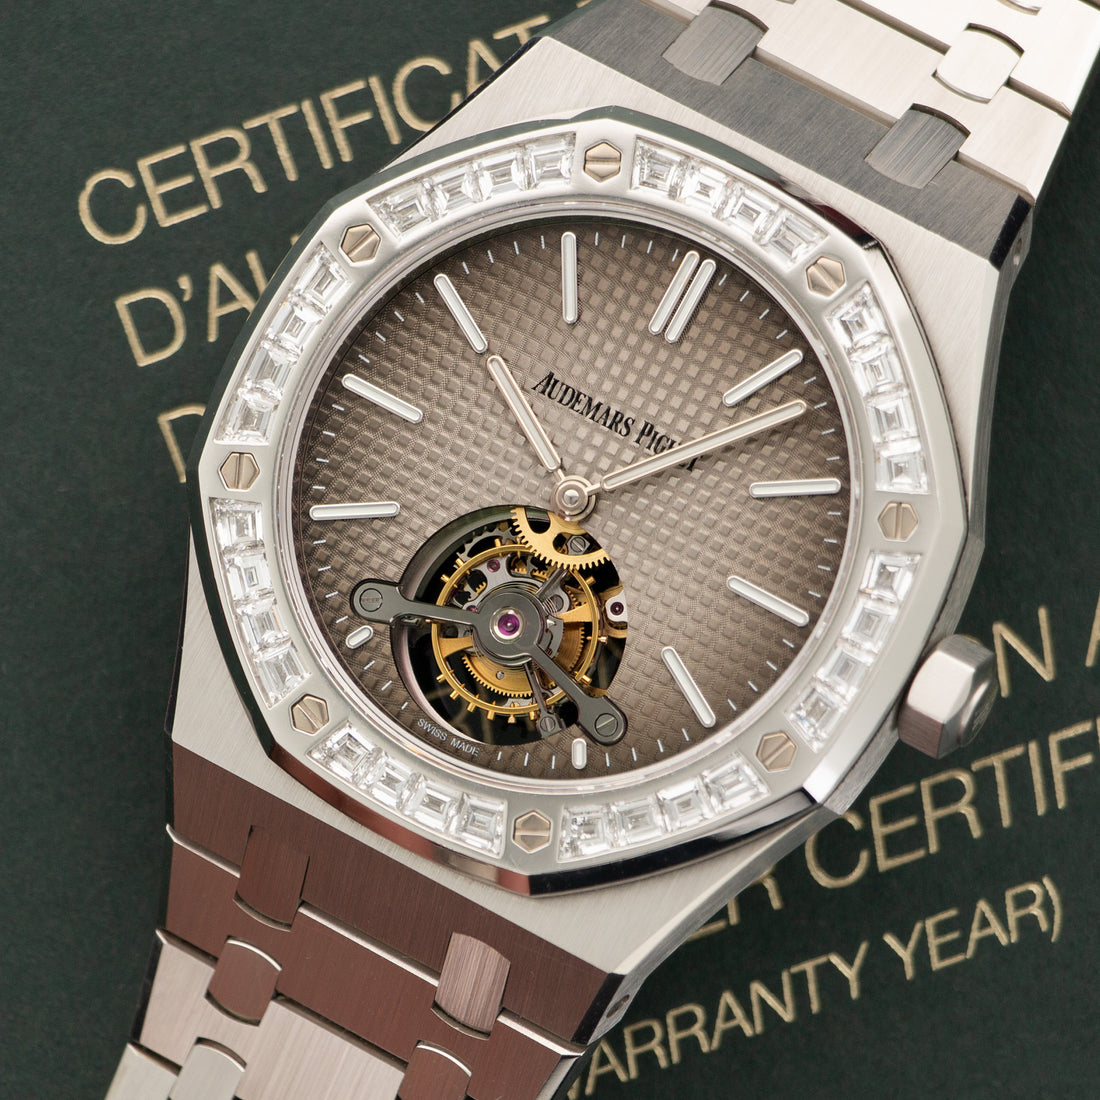 Audemars Piguet Platinum Royal Oak Tourbillon Baguette Diamond Watch